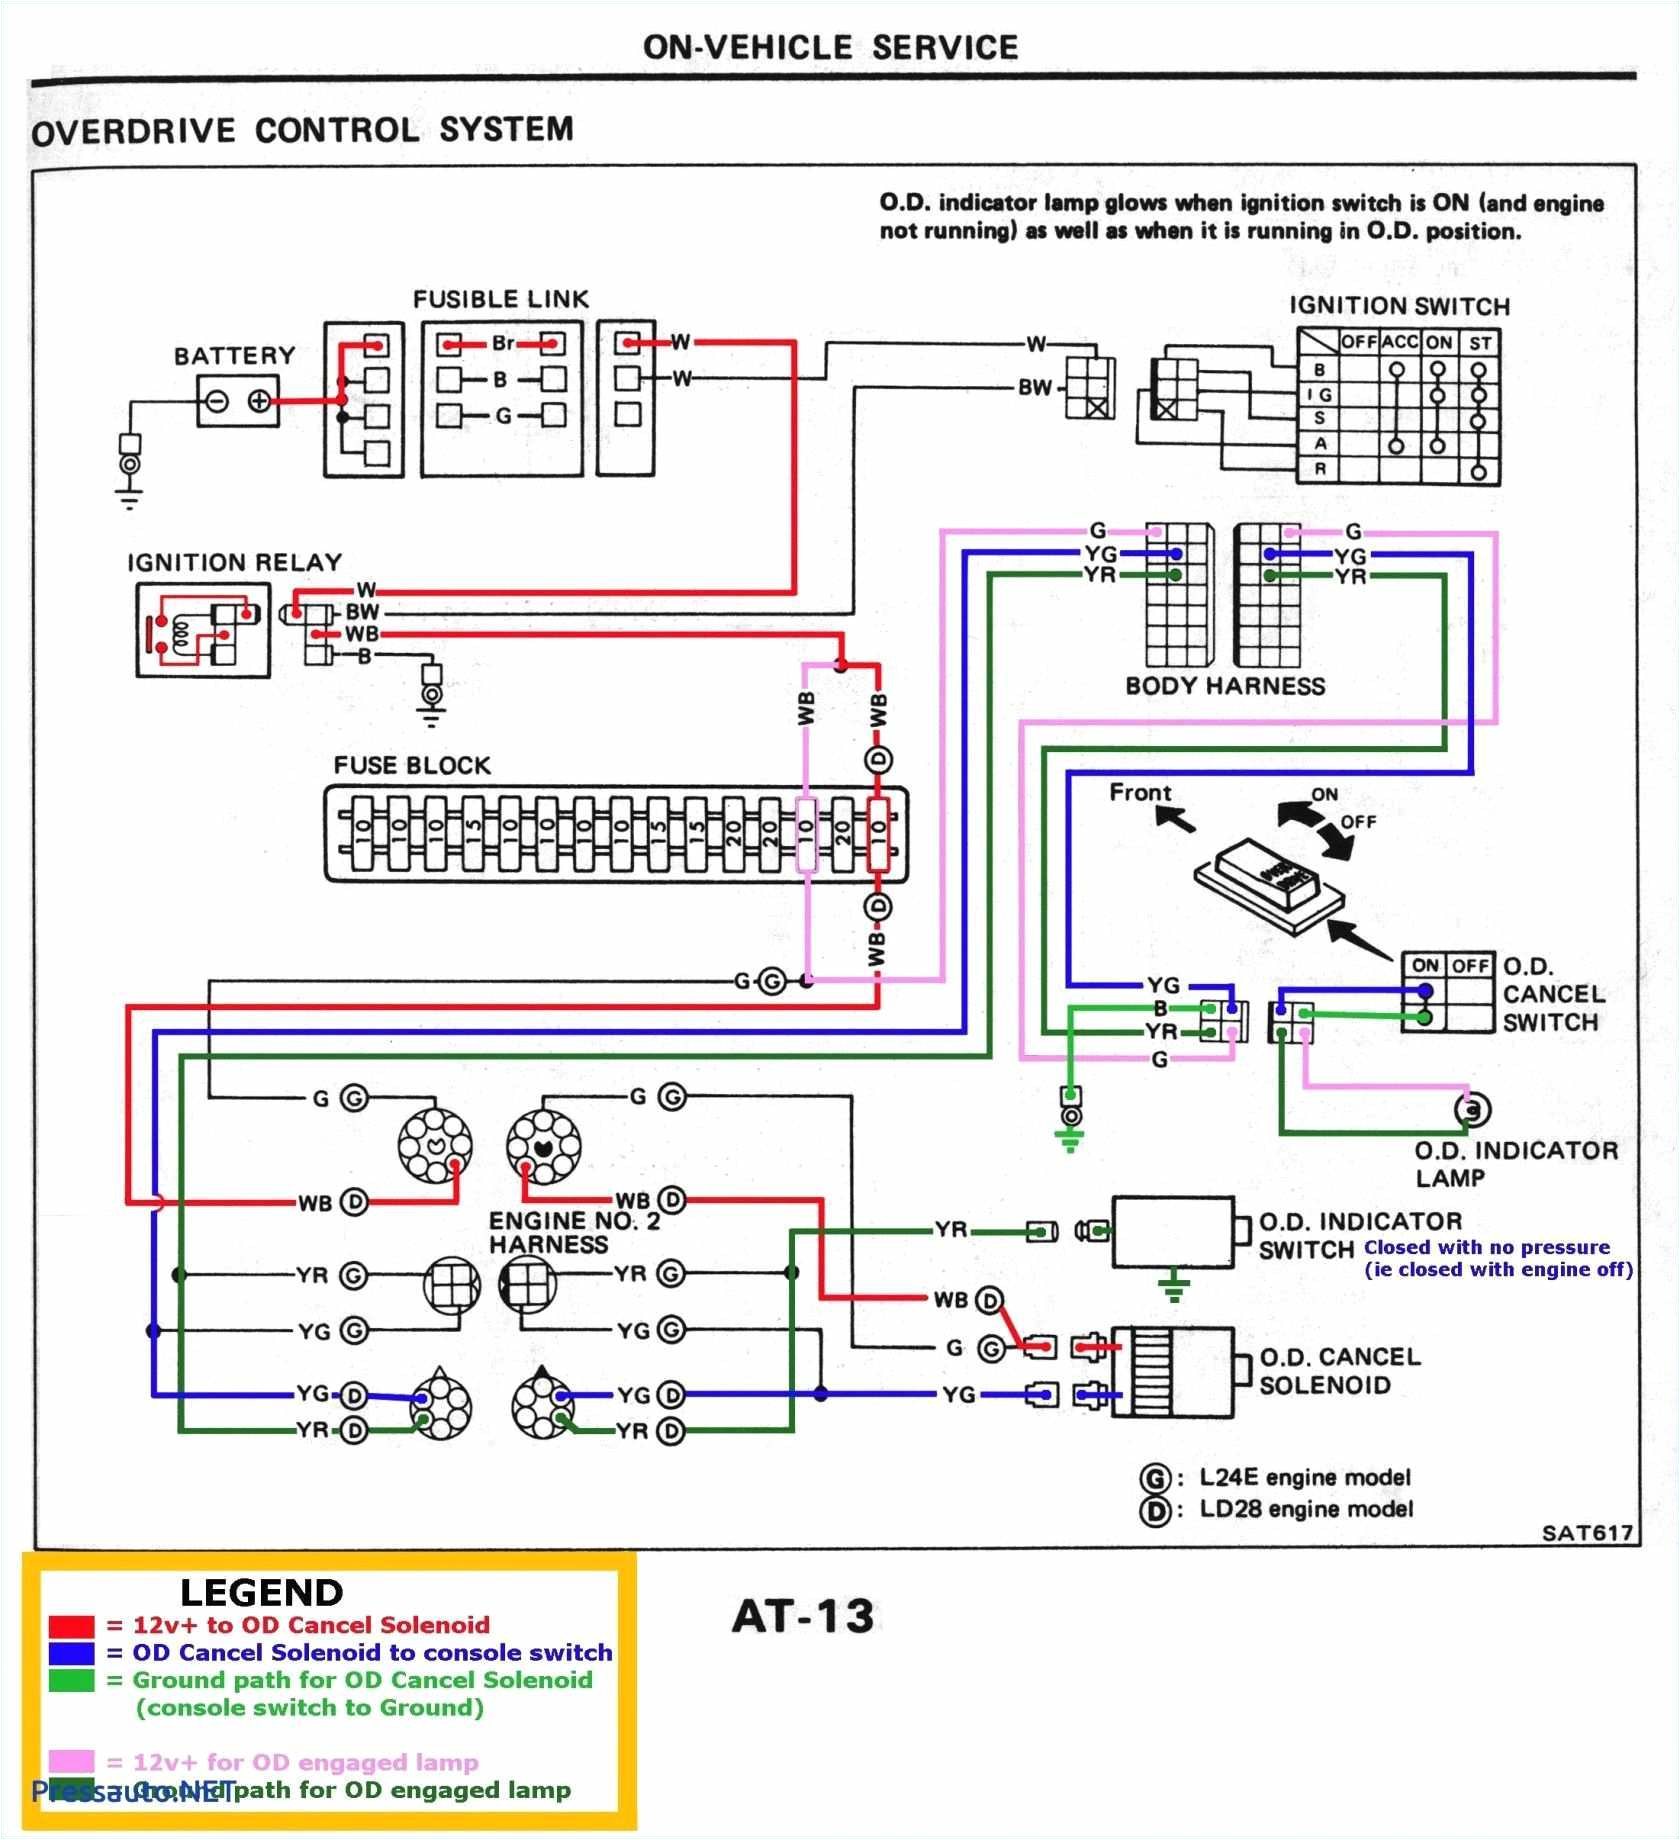 burny phantom st wiring diagram wiring diagrams bib burny phantom st wiring diagram